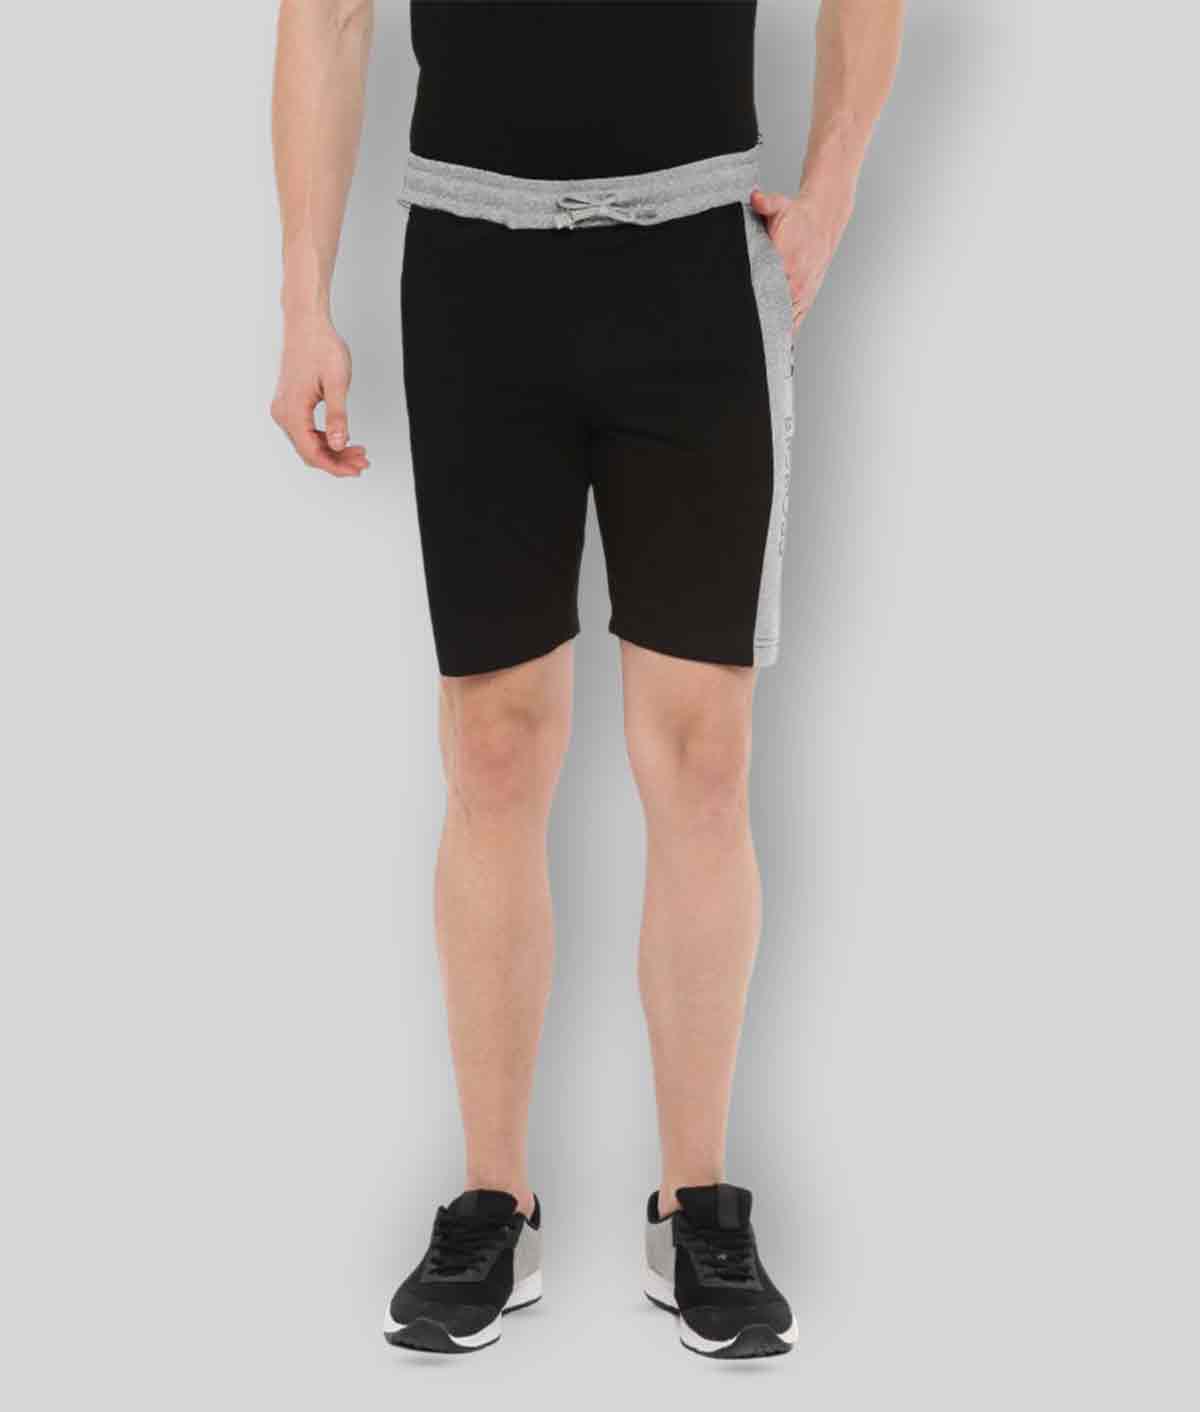     			Dollar - Black Cotton Blend Men's Shorts ( Pack of 1 )